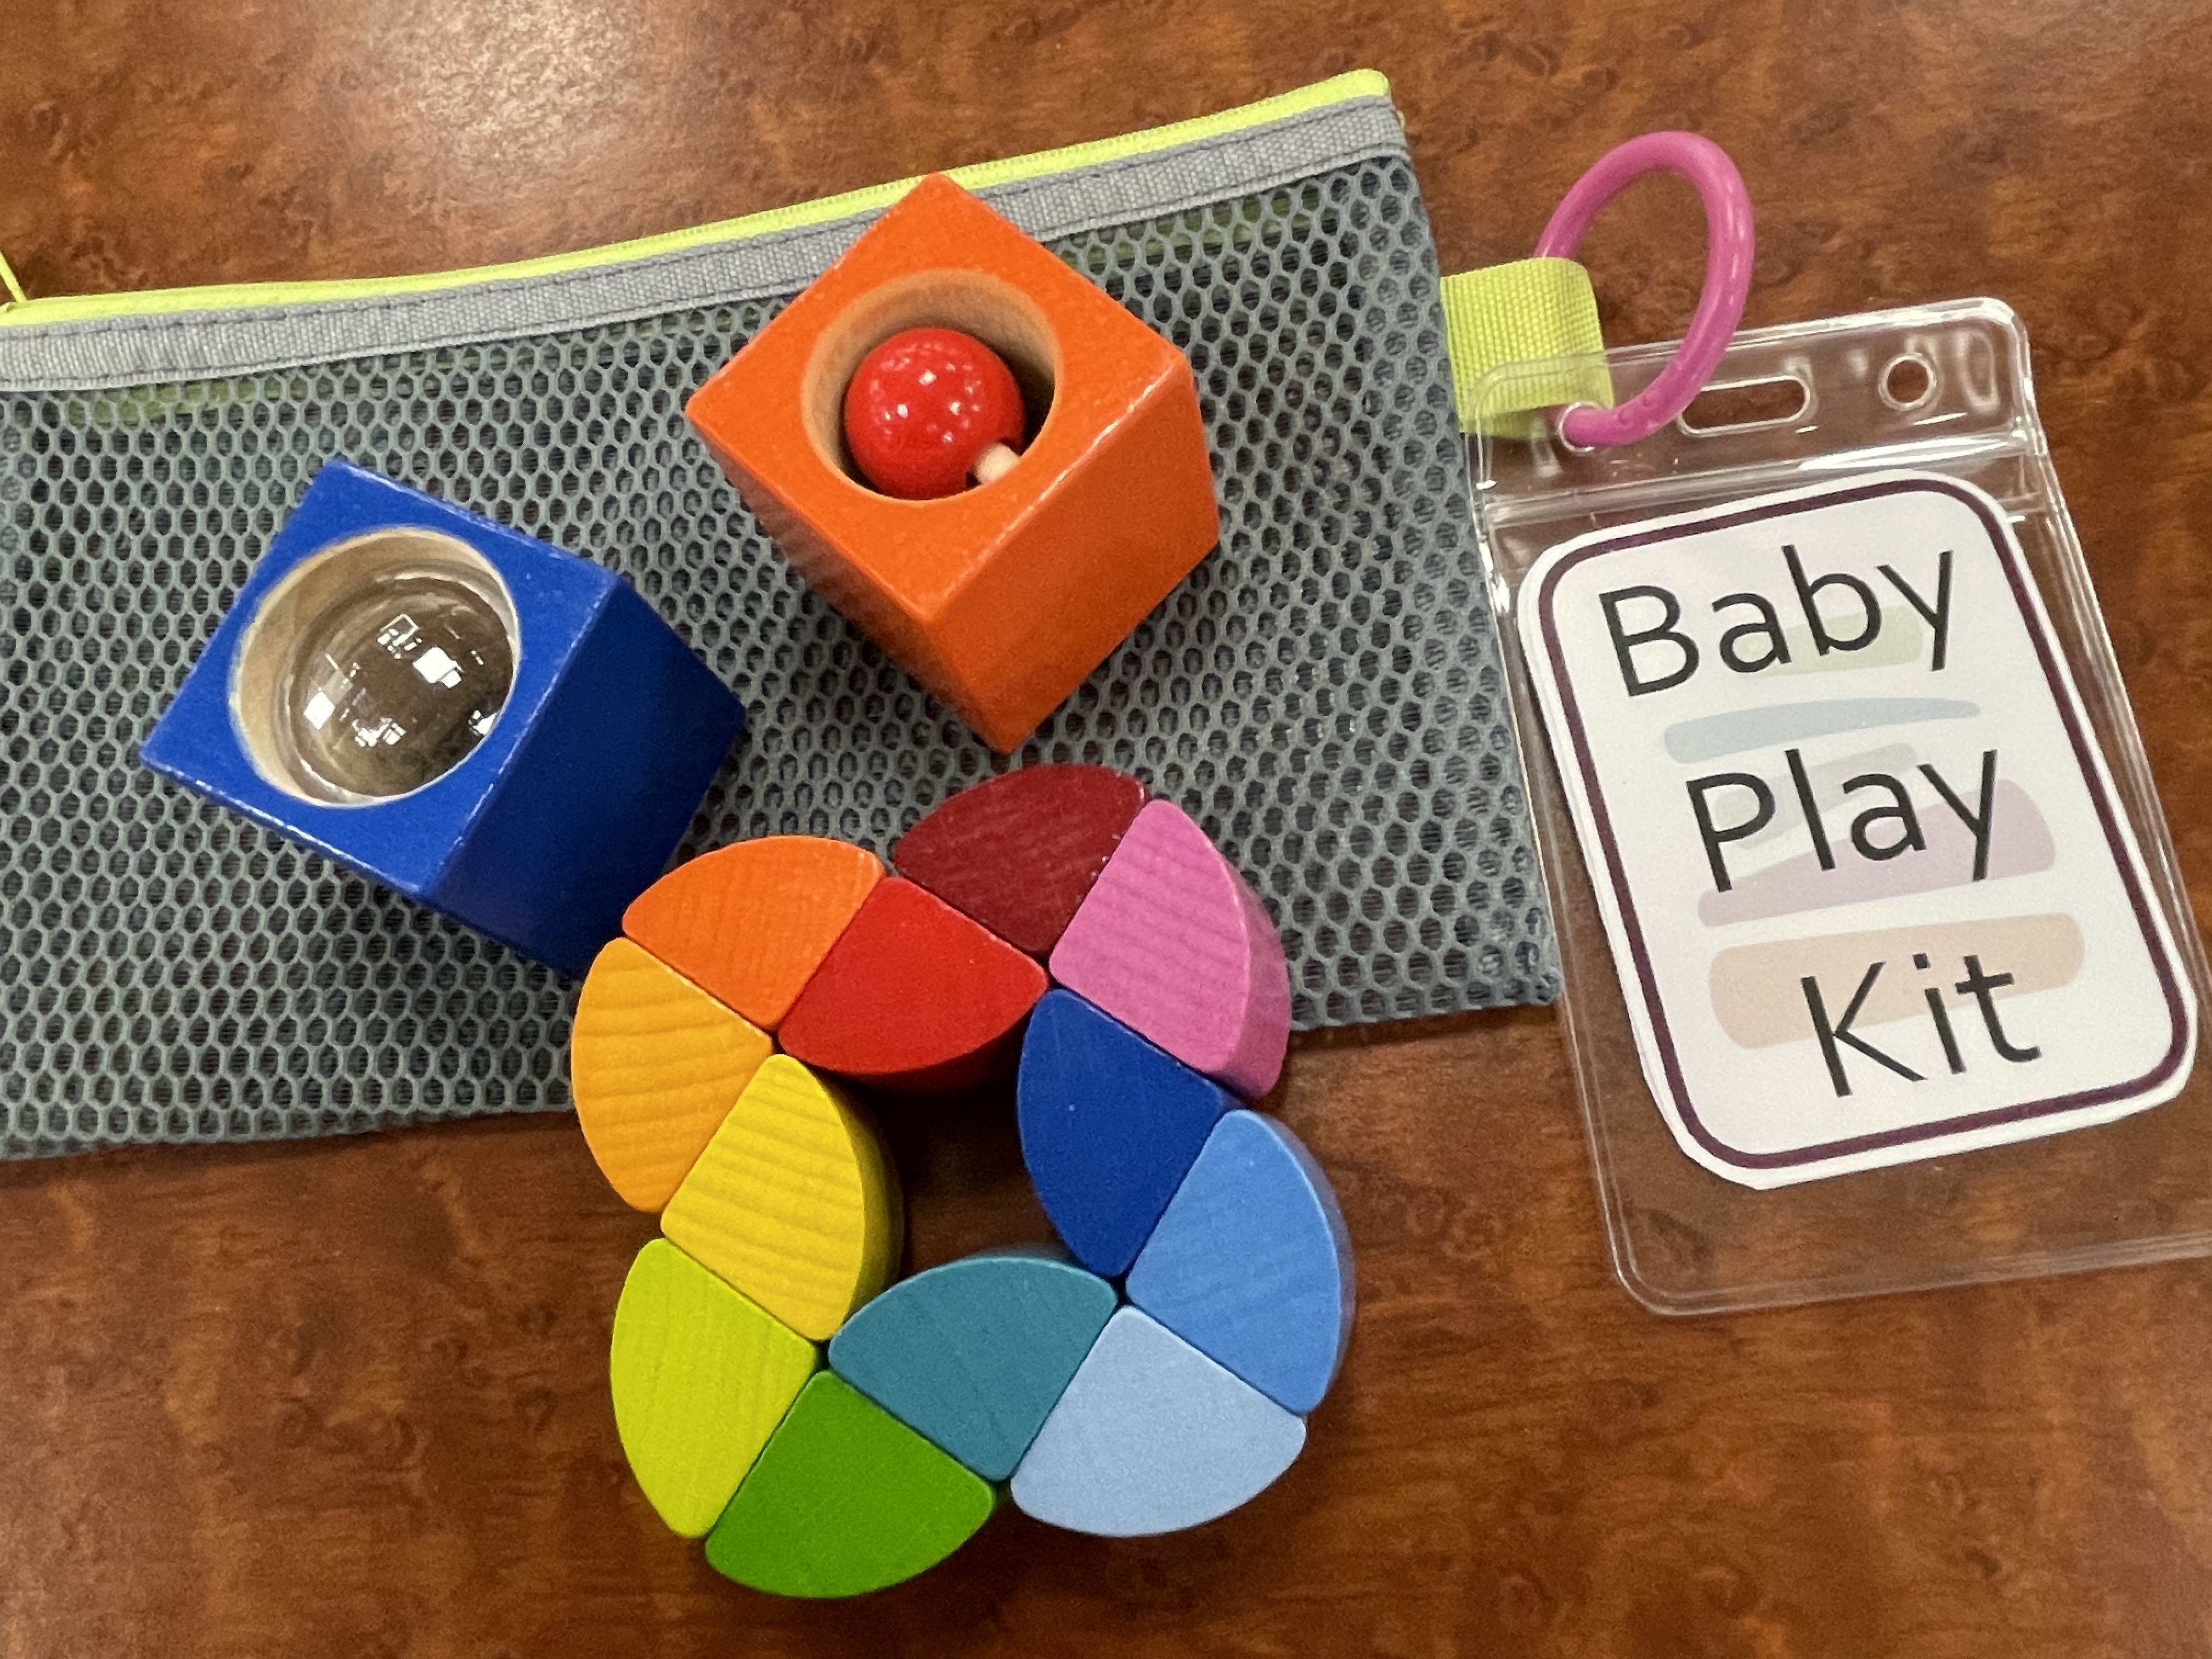 Baby Play Kits at Madison Public Library